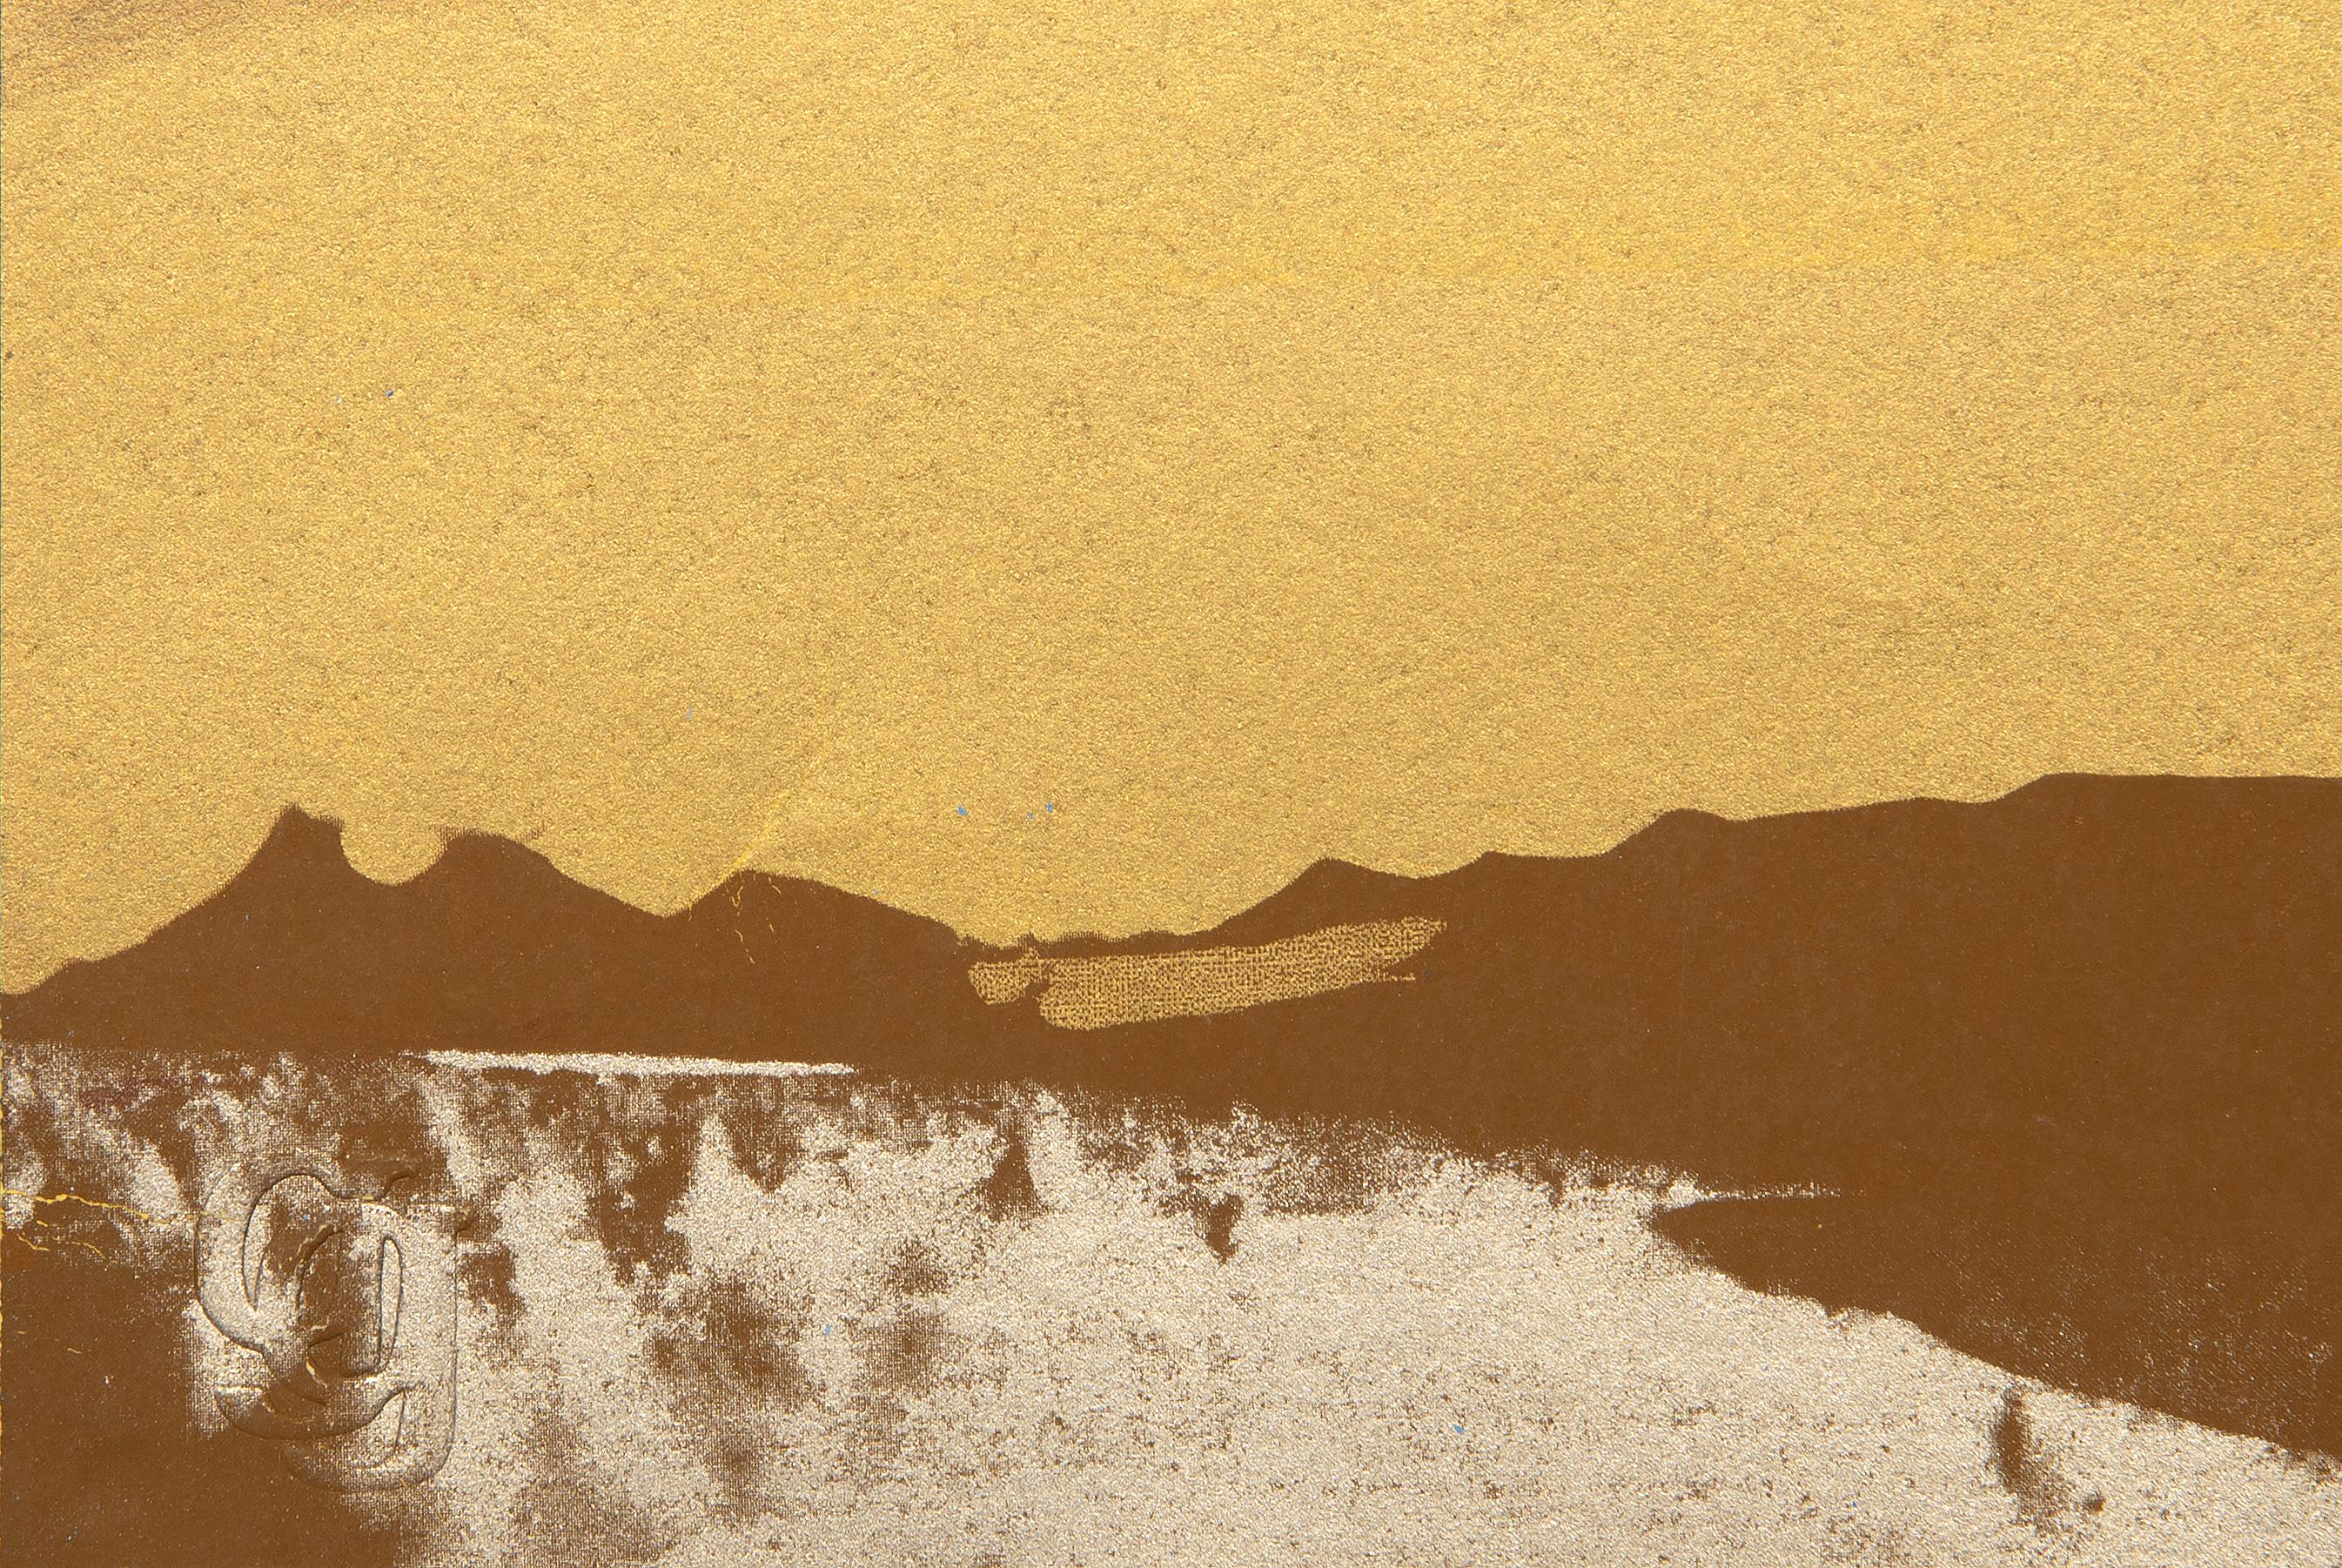 Golden Hour - Abstract Screenprint Monoprint by Joseph Grippi For Sale 2